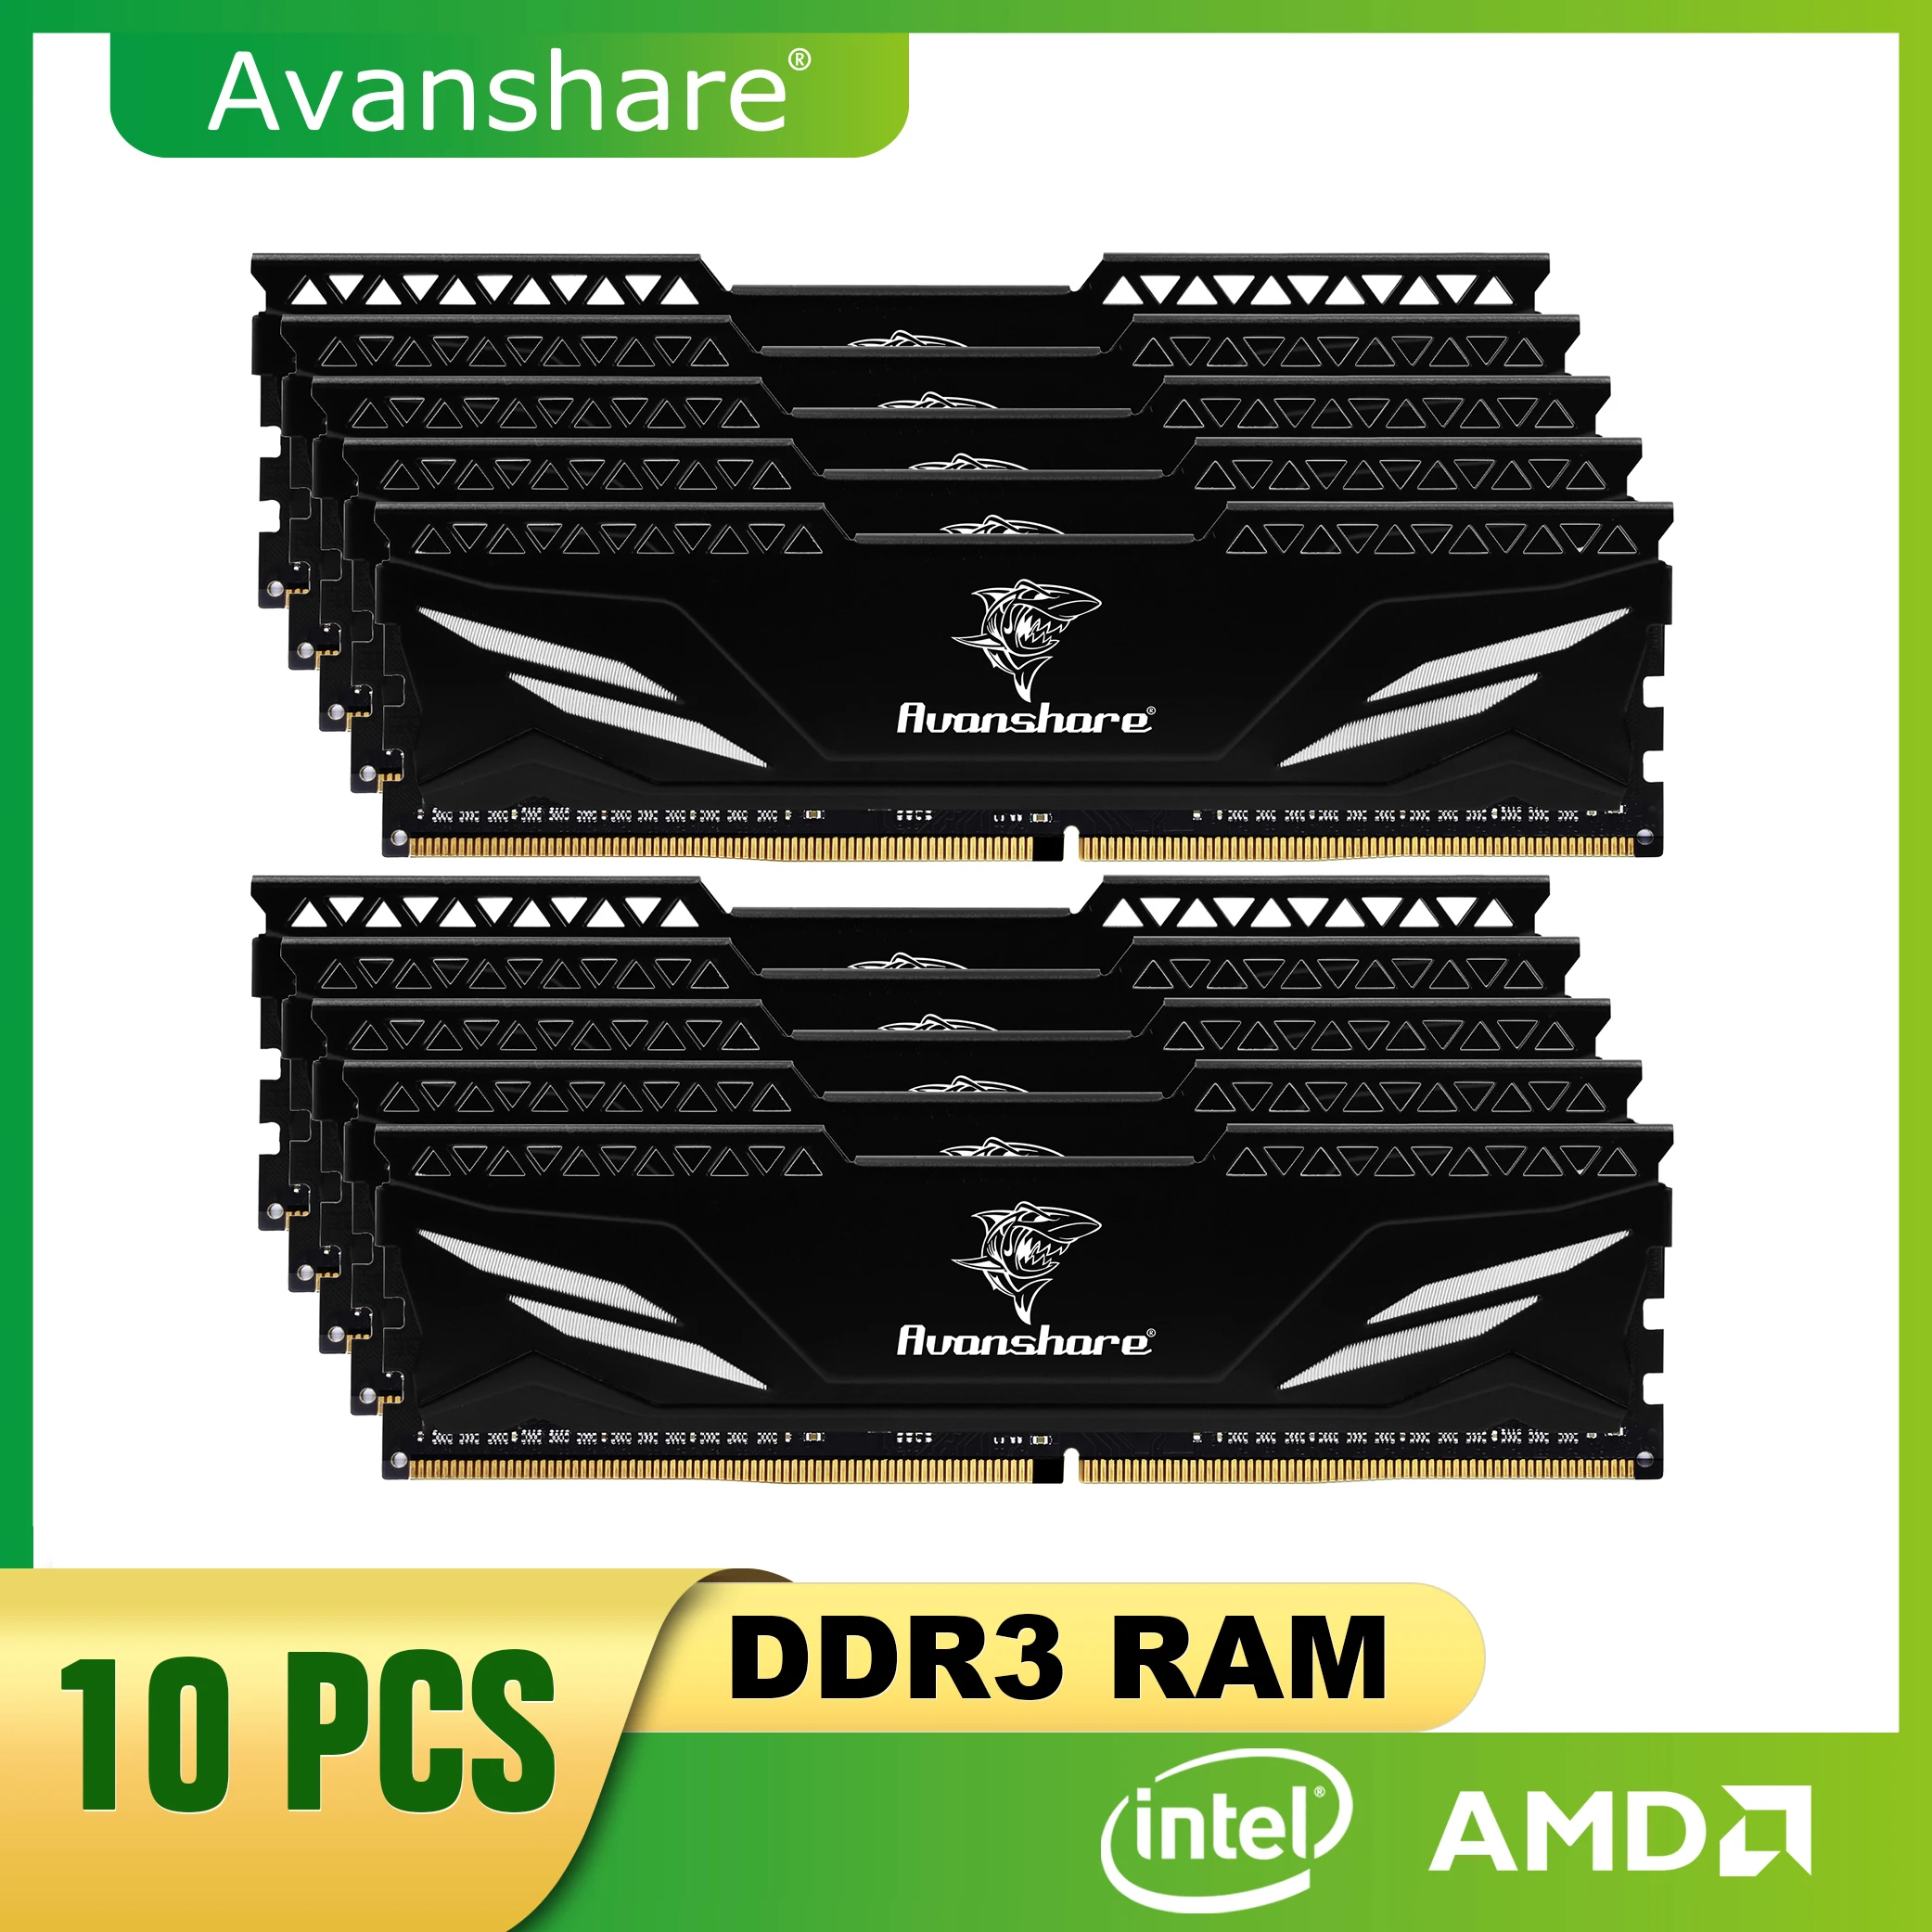 

Avanshare 10pcs DDR3 RAM 4GB 8GB 1333MHz 1600Mhz DIMM RAM 240PIN 1.5V PC3 10600 12800U Intel and AMD Desktop Computer Memory